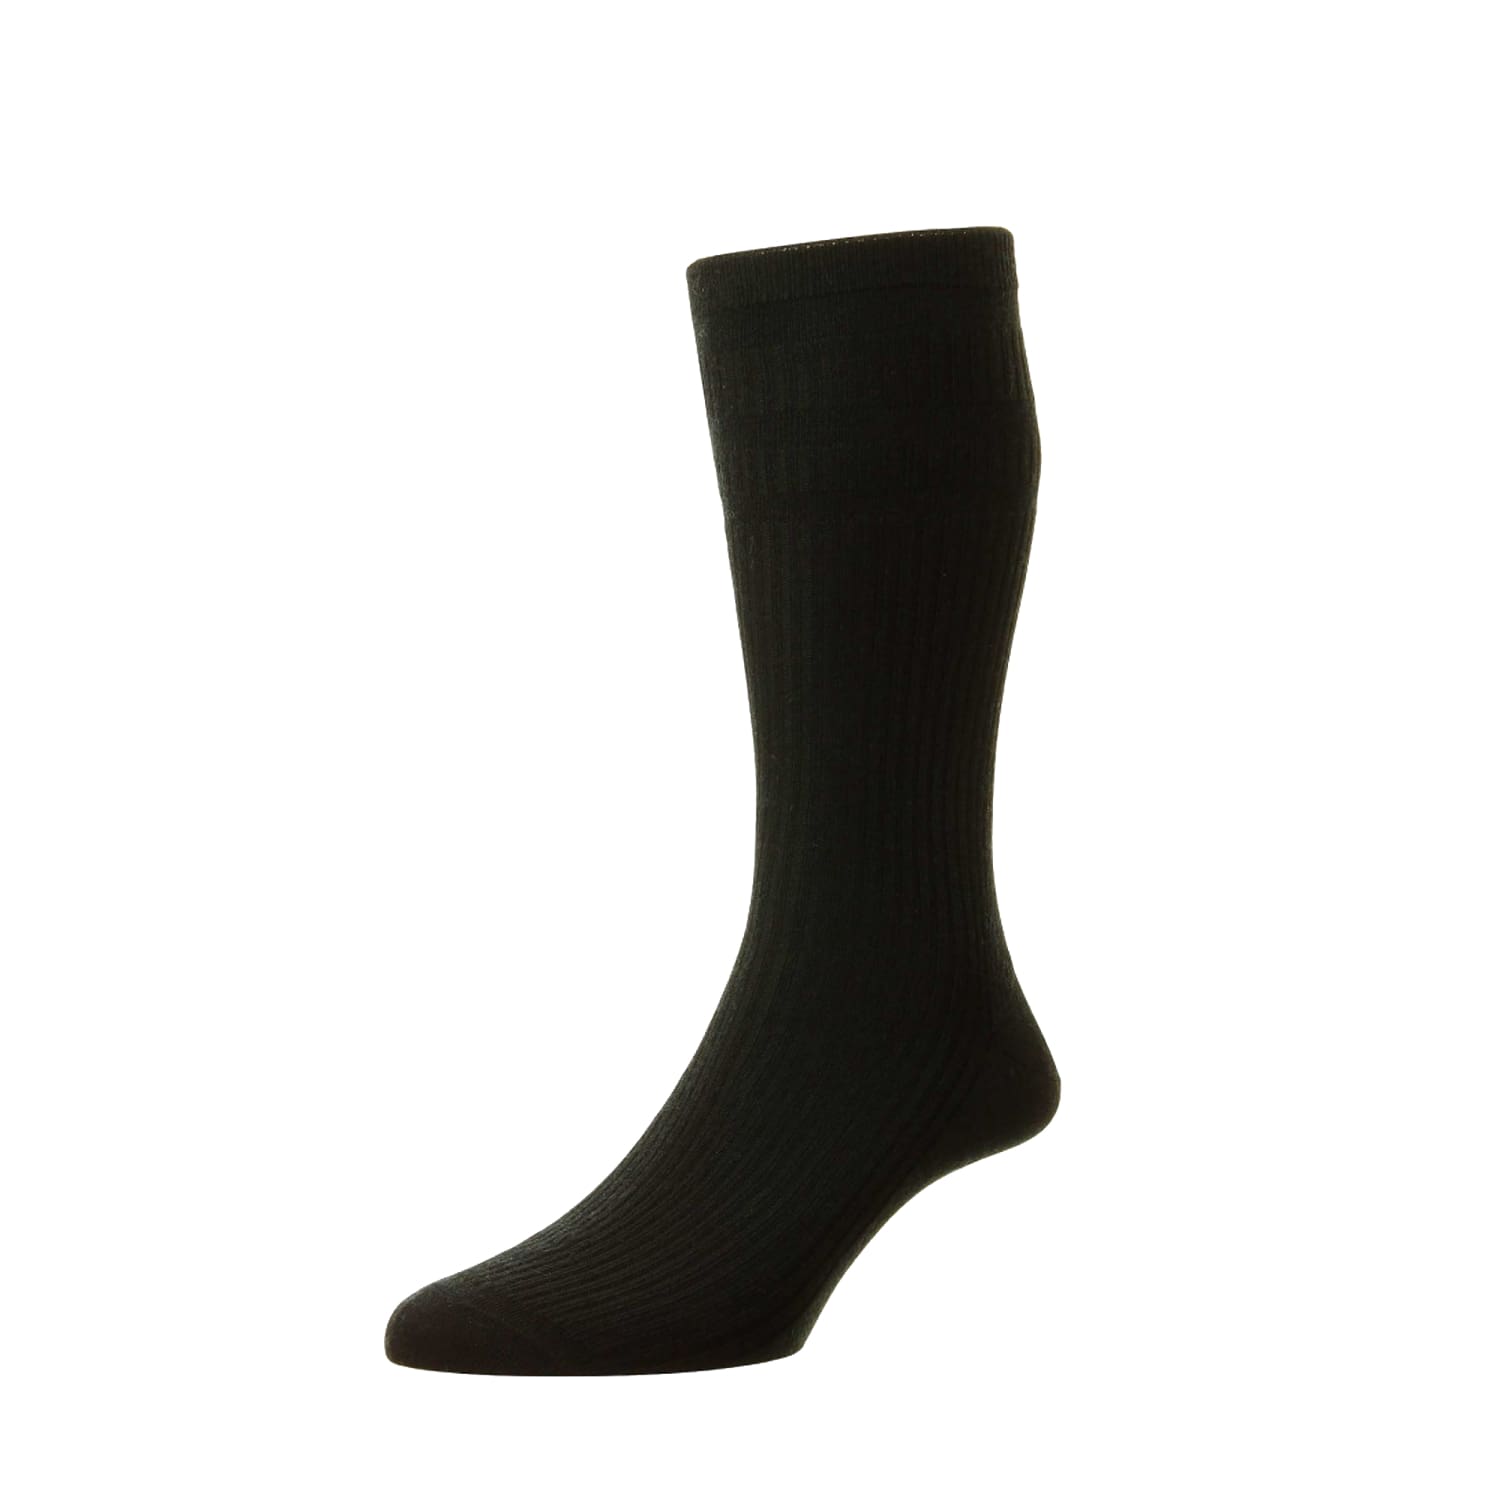 HJ Softop Socks - HJ90 - Wool - Black 1